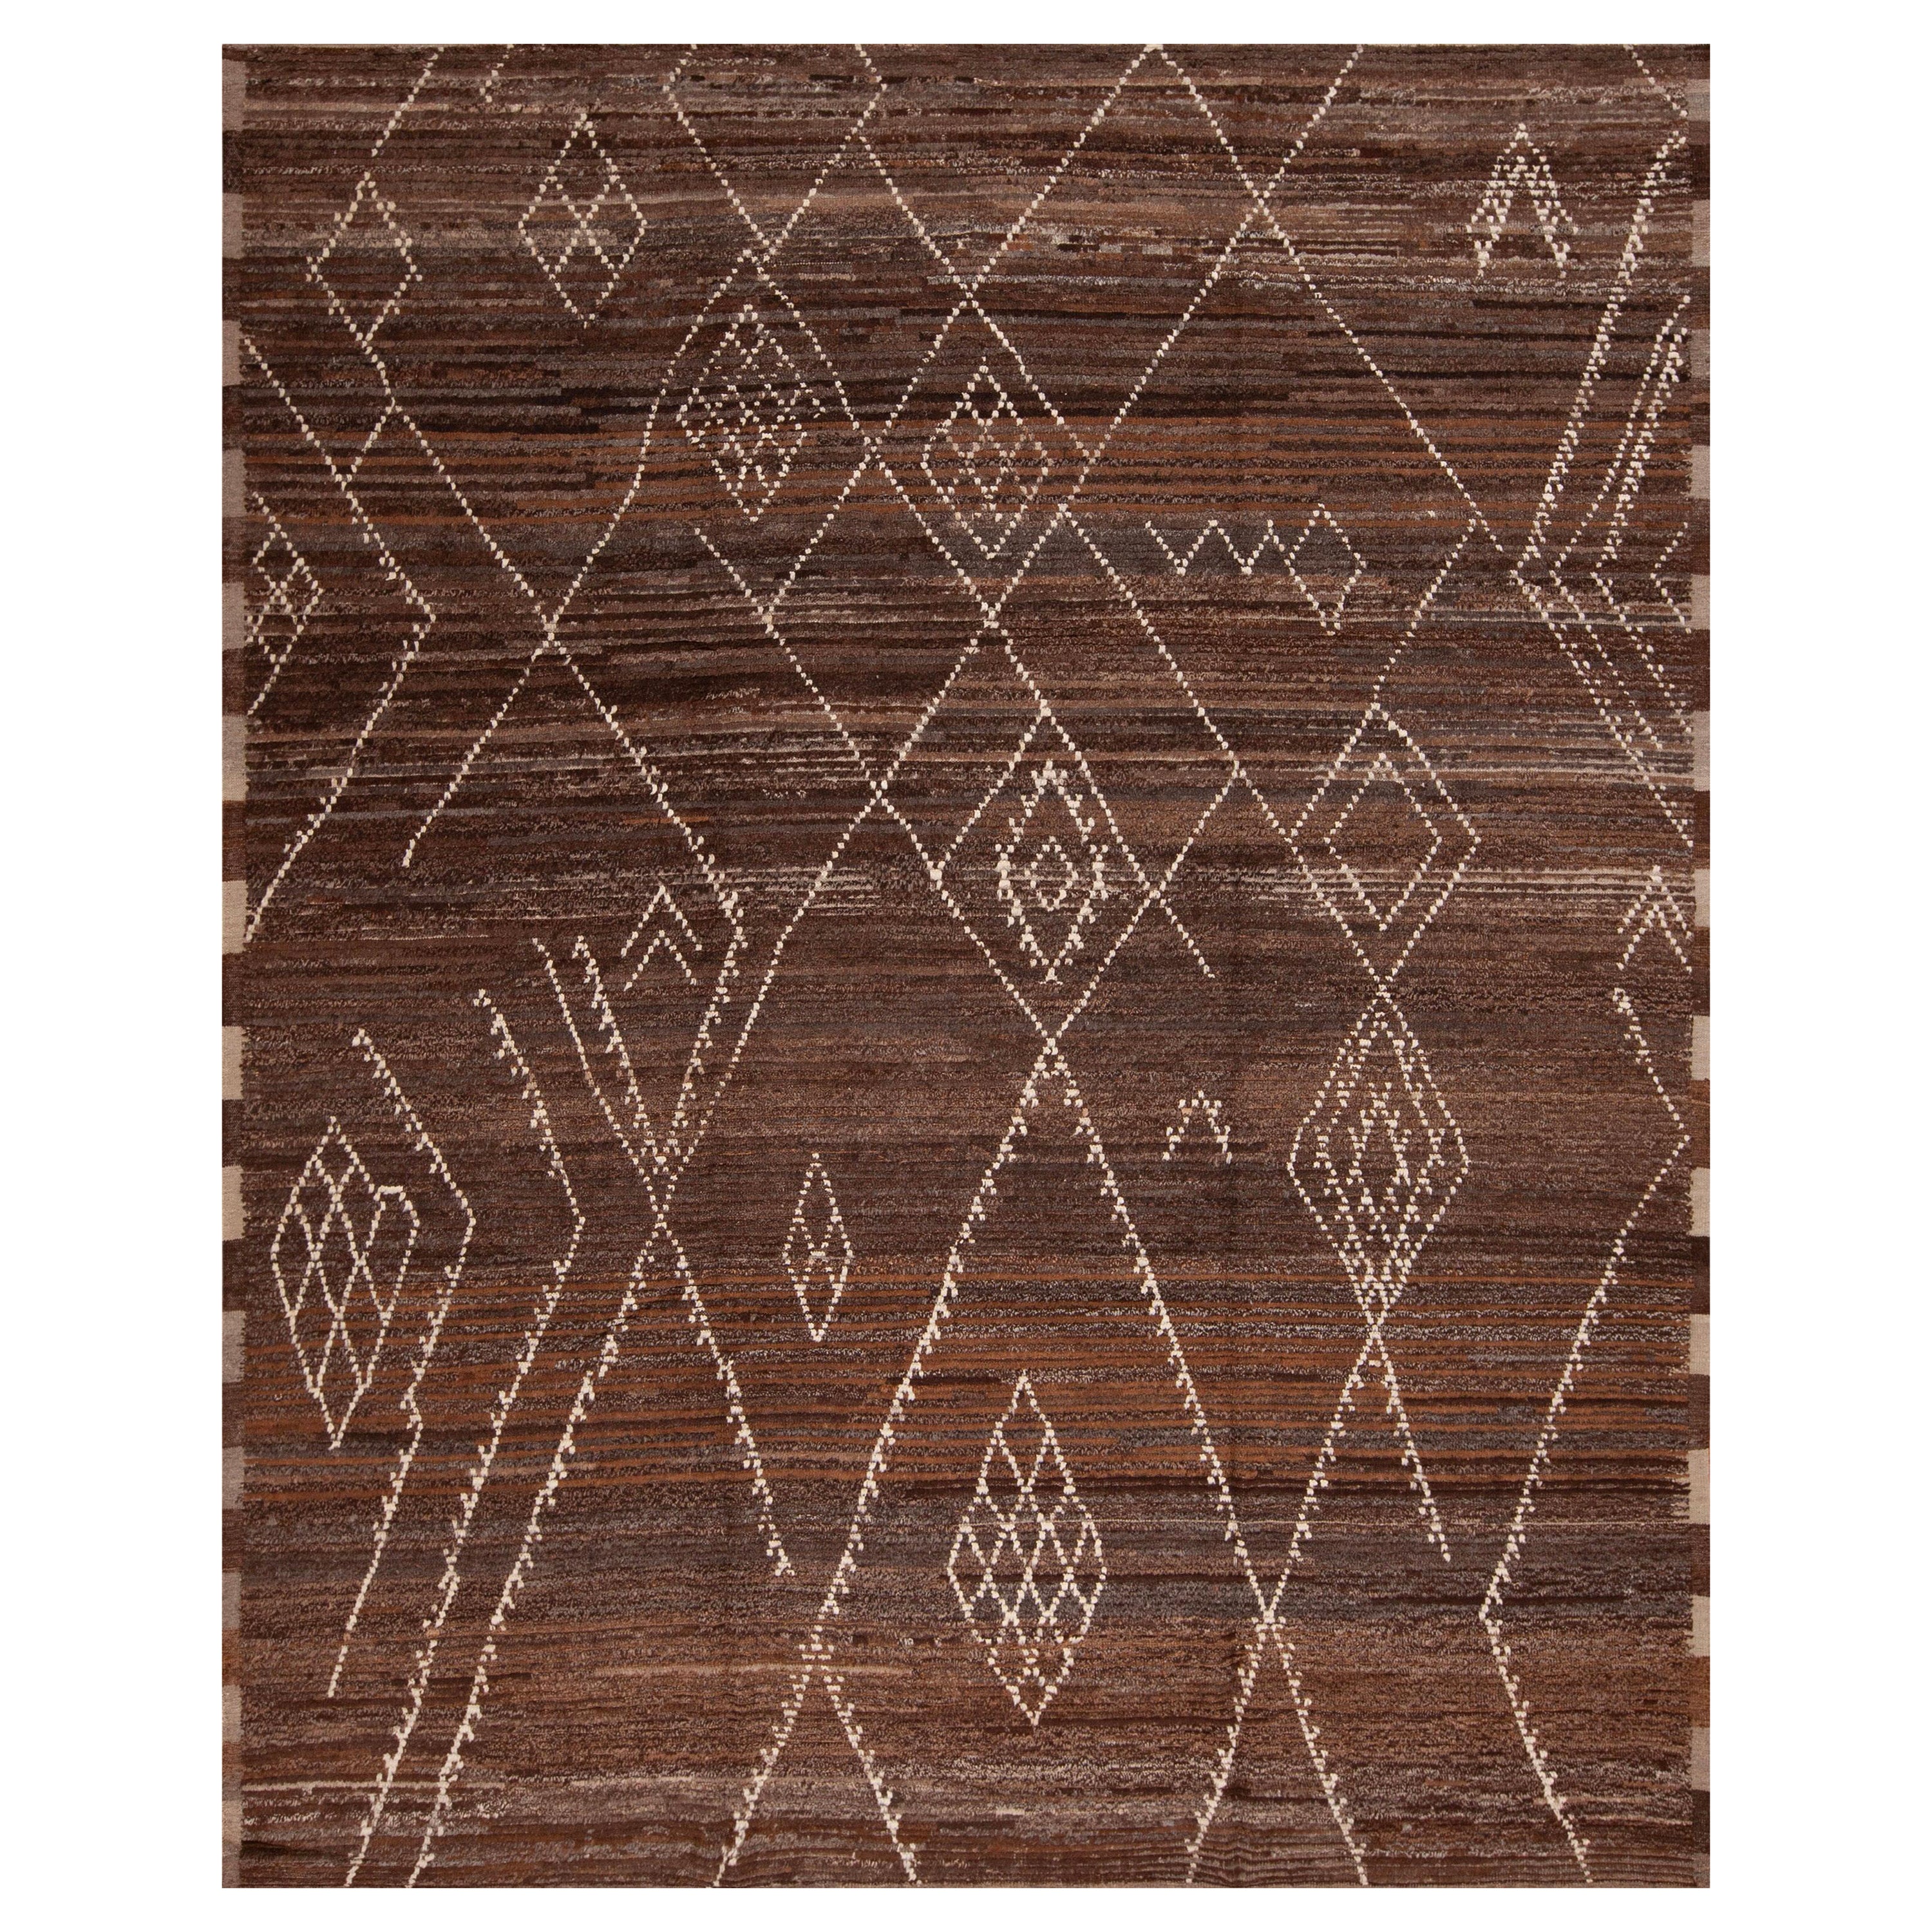 Nazmiyal Collection Primitive Tribal Geometric Pattern Modern Rug 9'2" x 11'4" For Sale